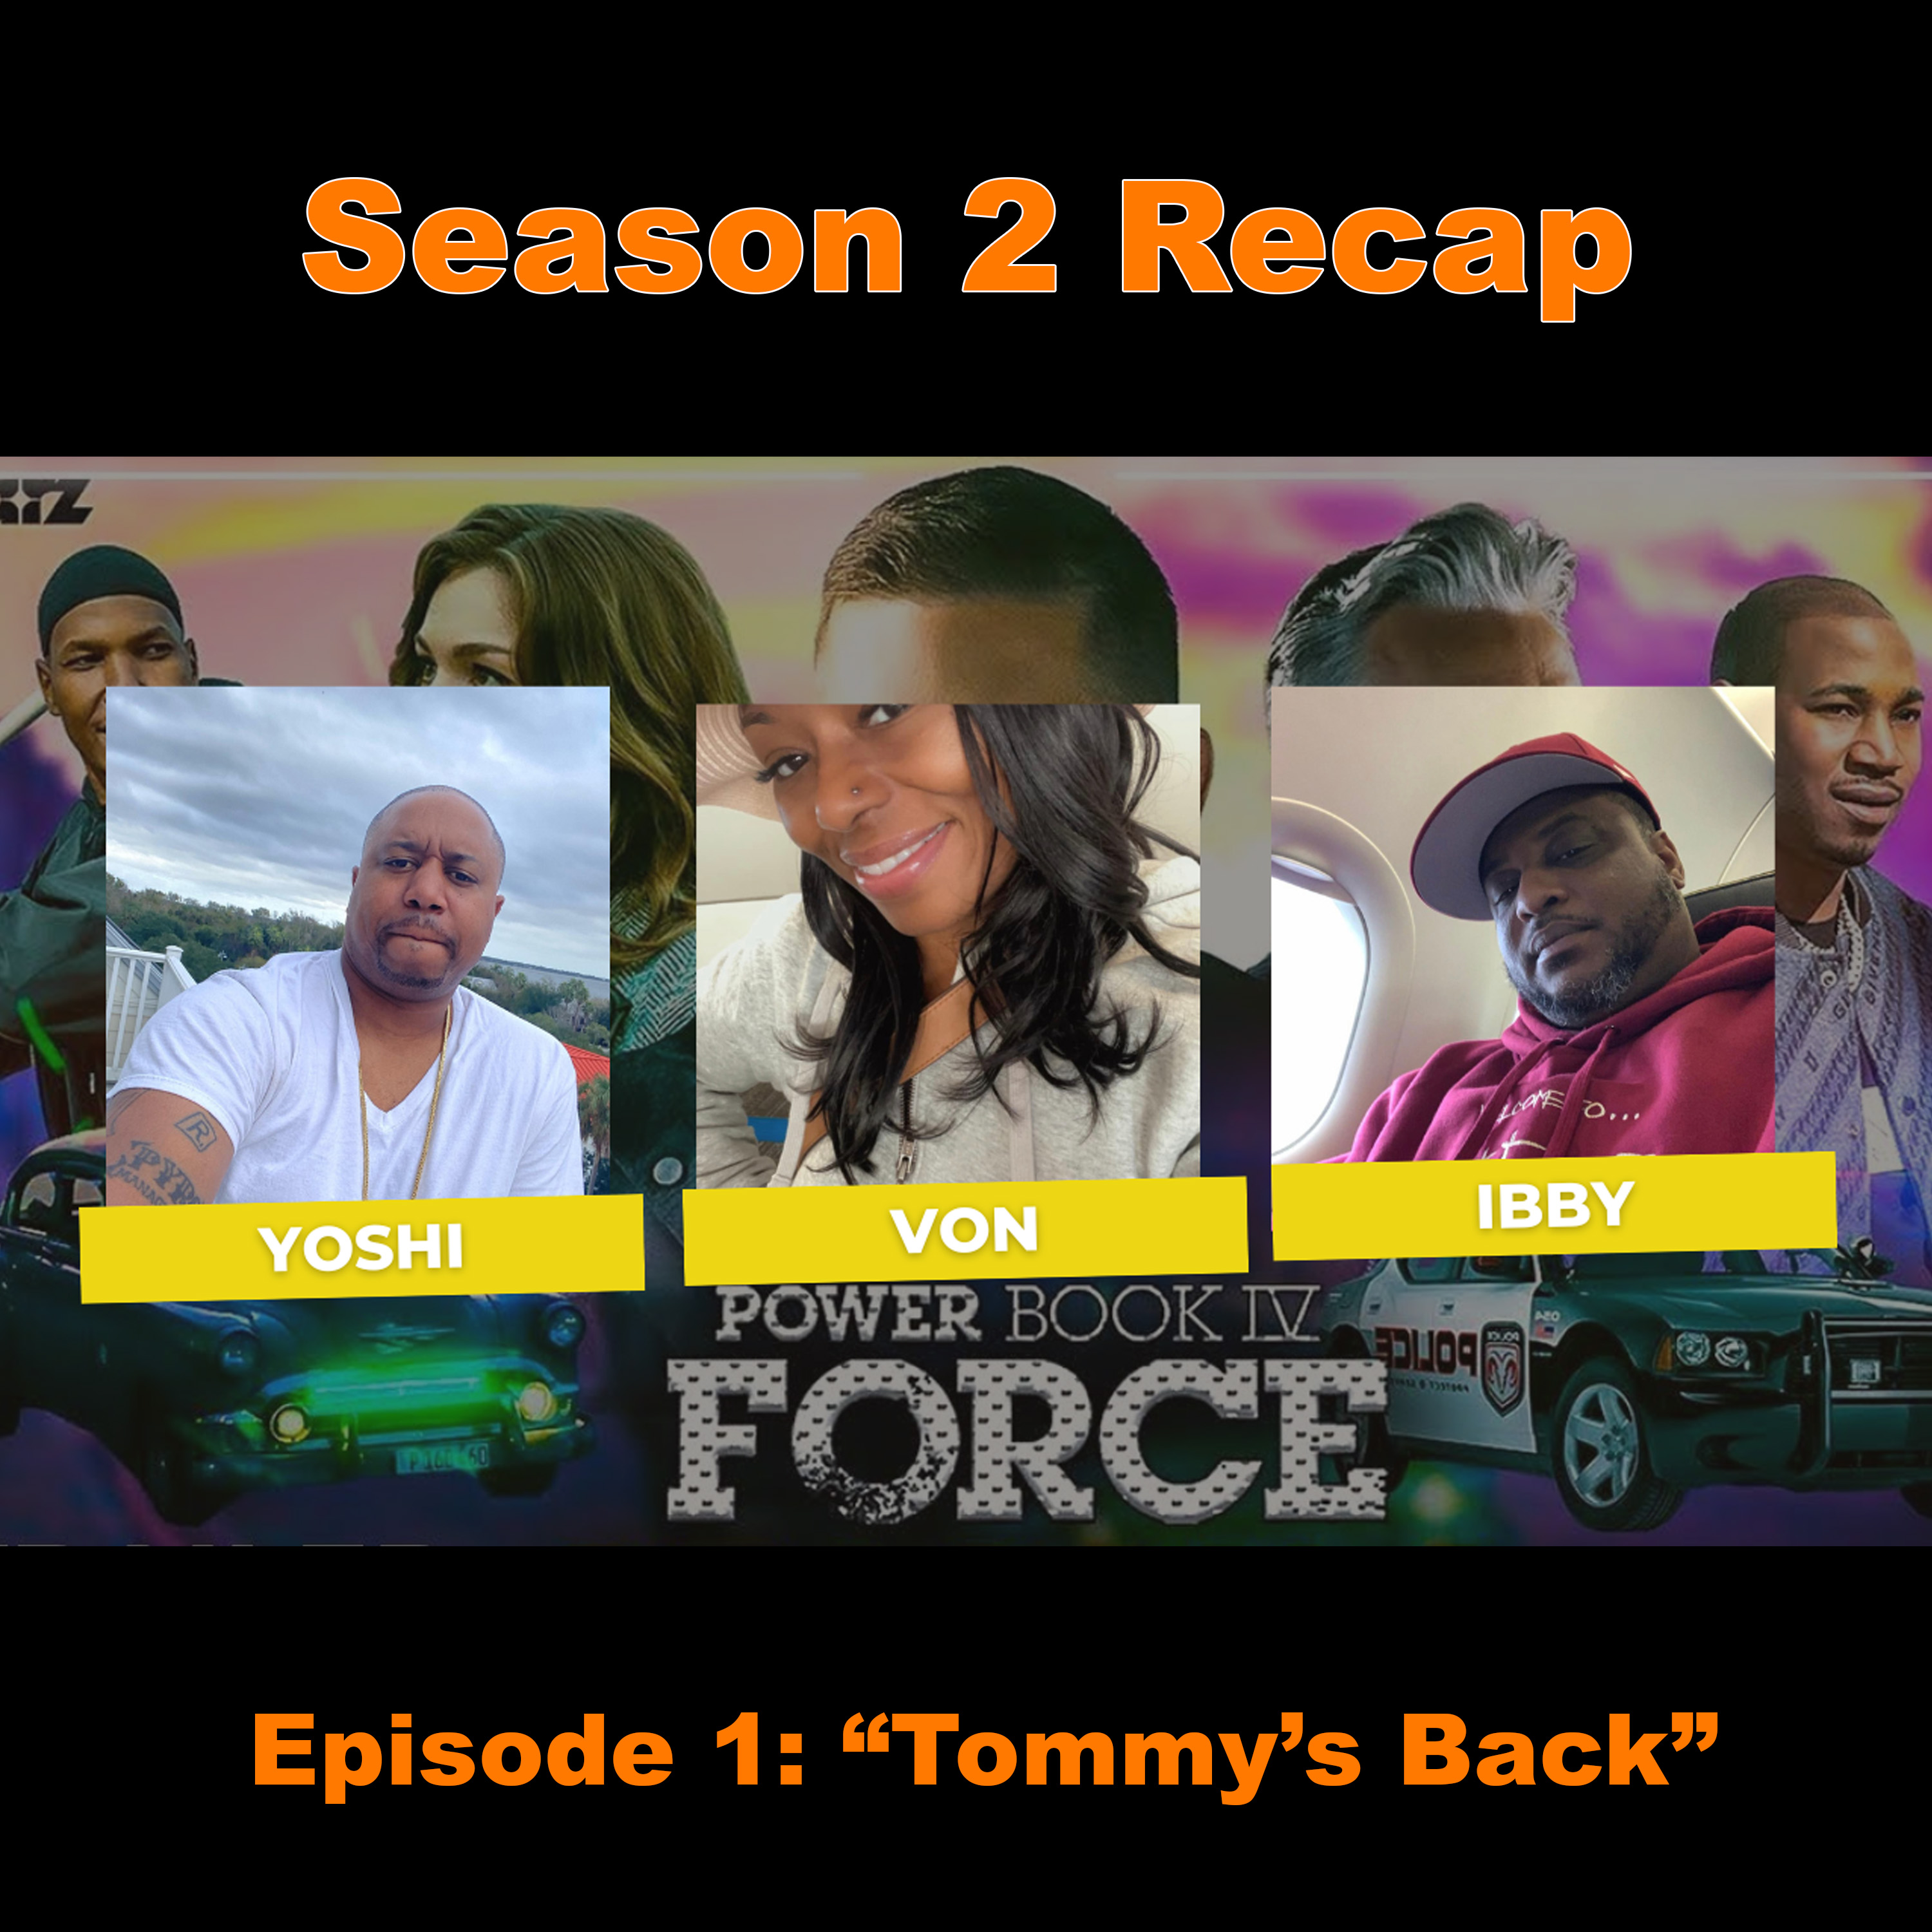 Power Book IV: Force Season 2 Episode 1 Recap